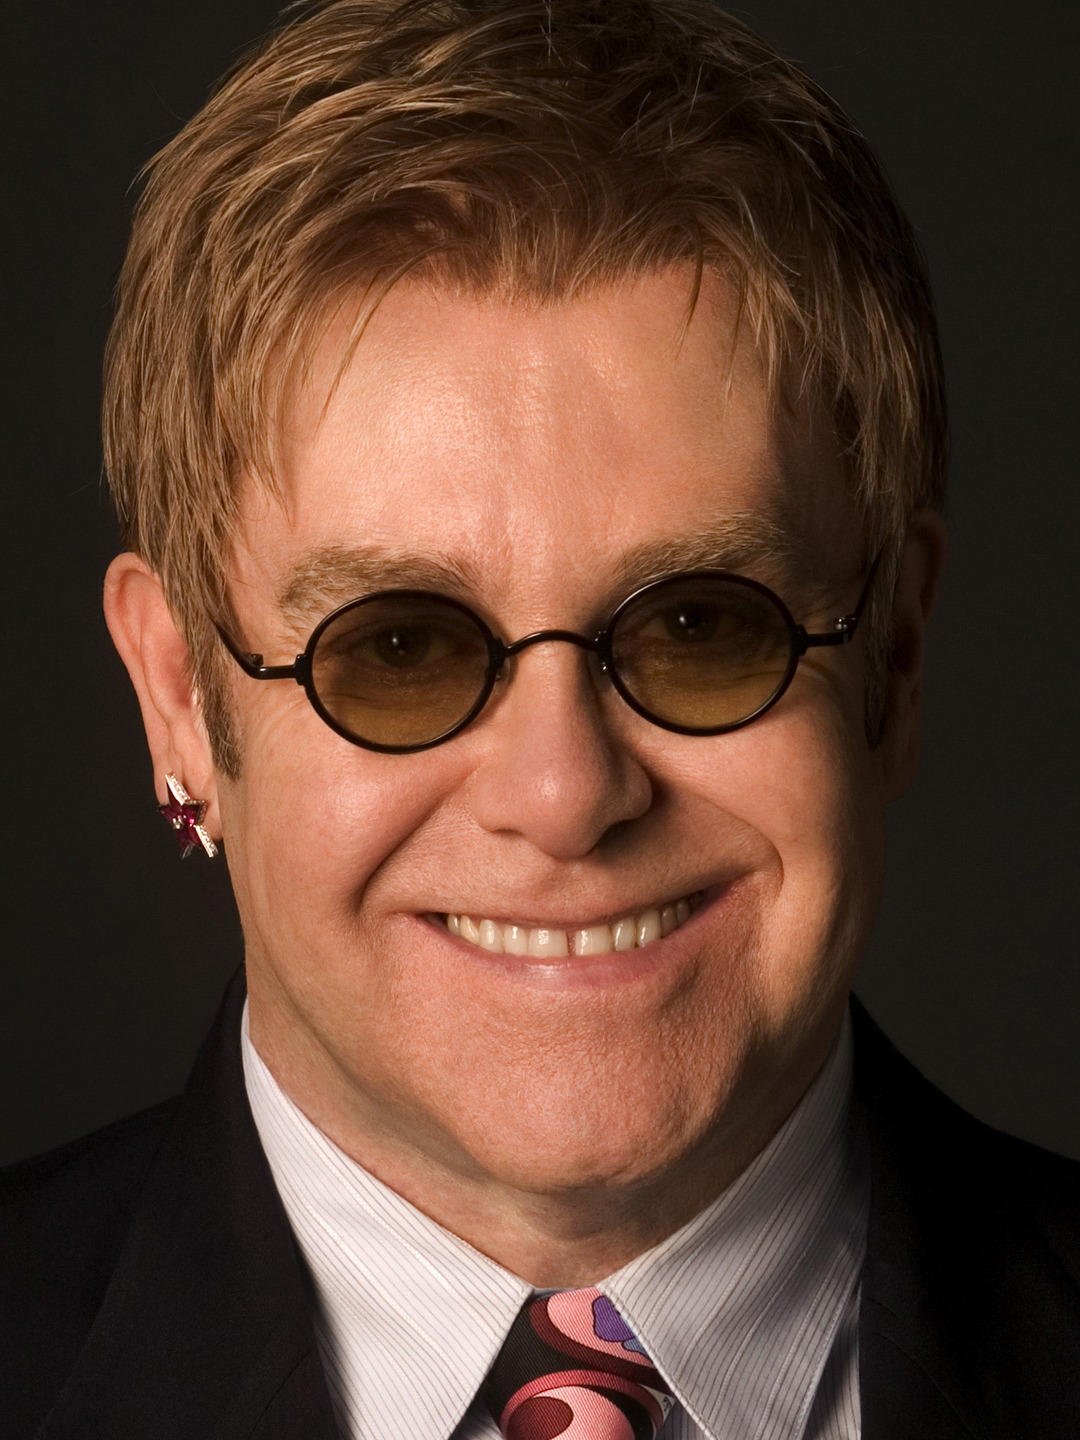 Elton John in his teens